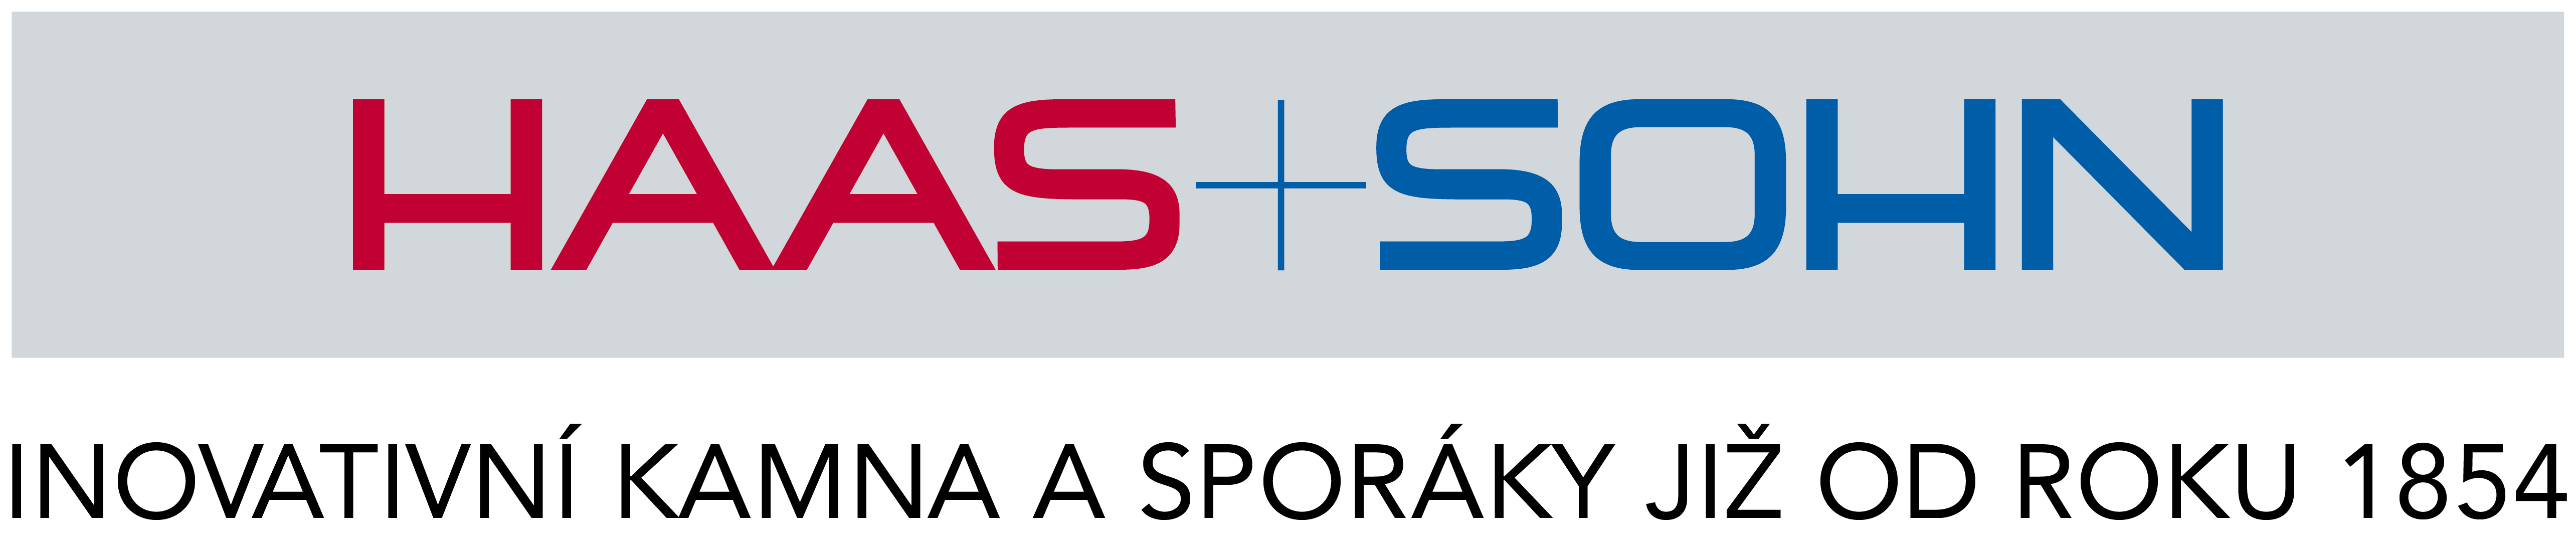 Haas + Sohn logo